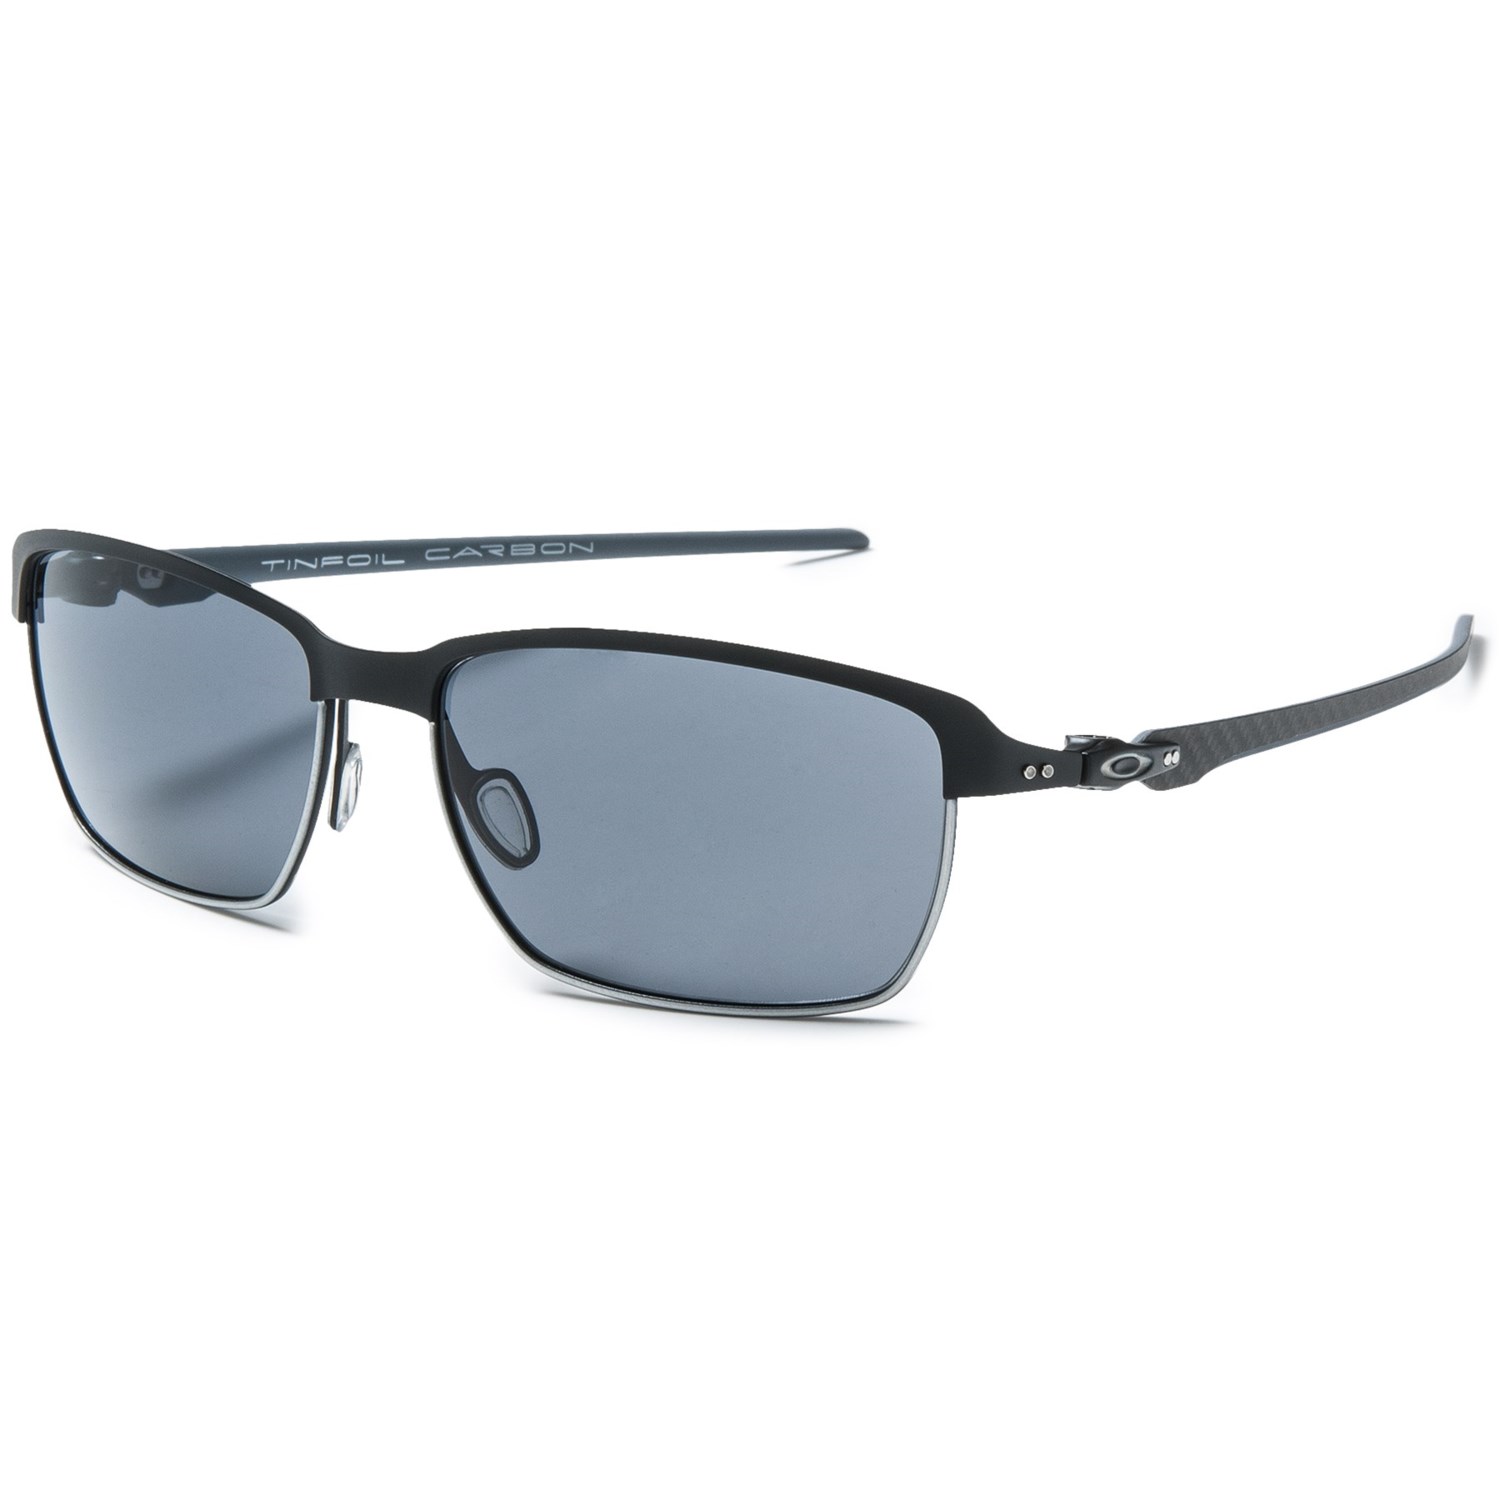 Oakley Tinfoil Carbon Sunglasses Polarized Plutonite® Lenses Save 37